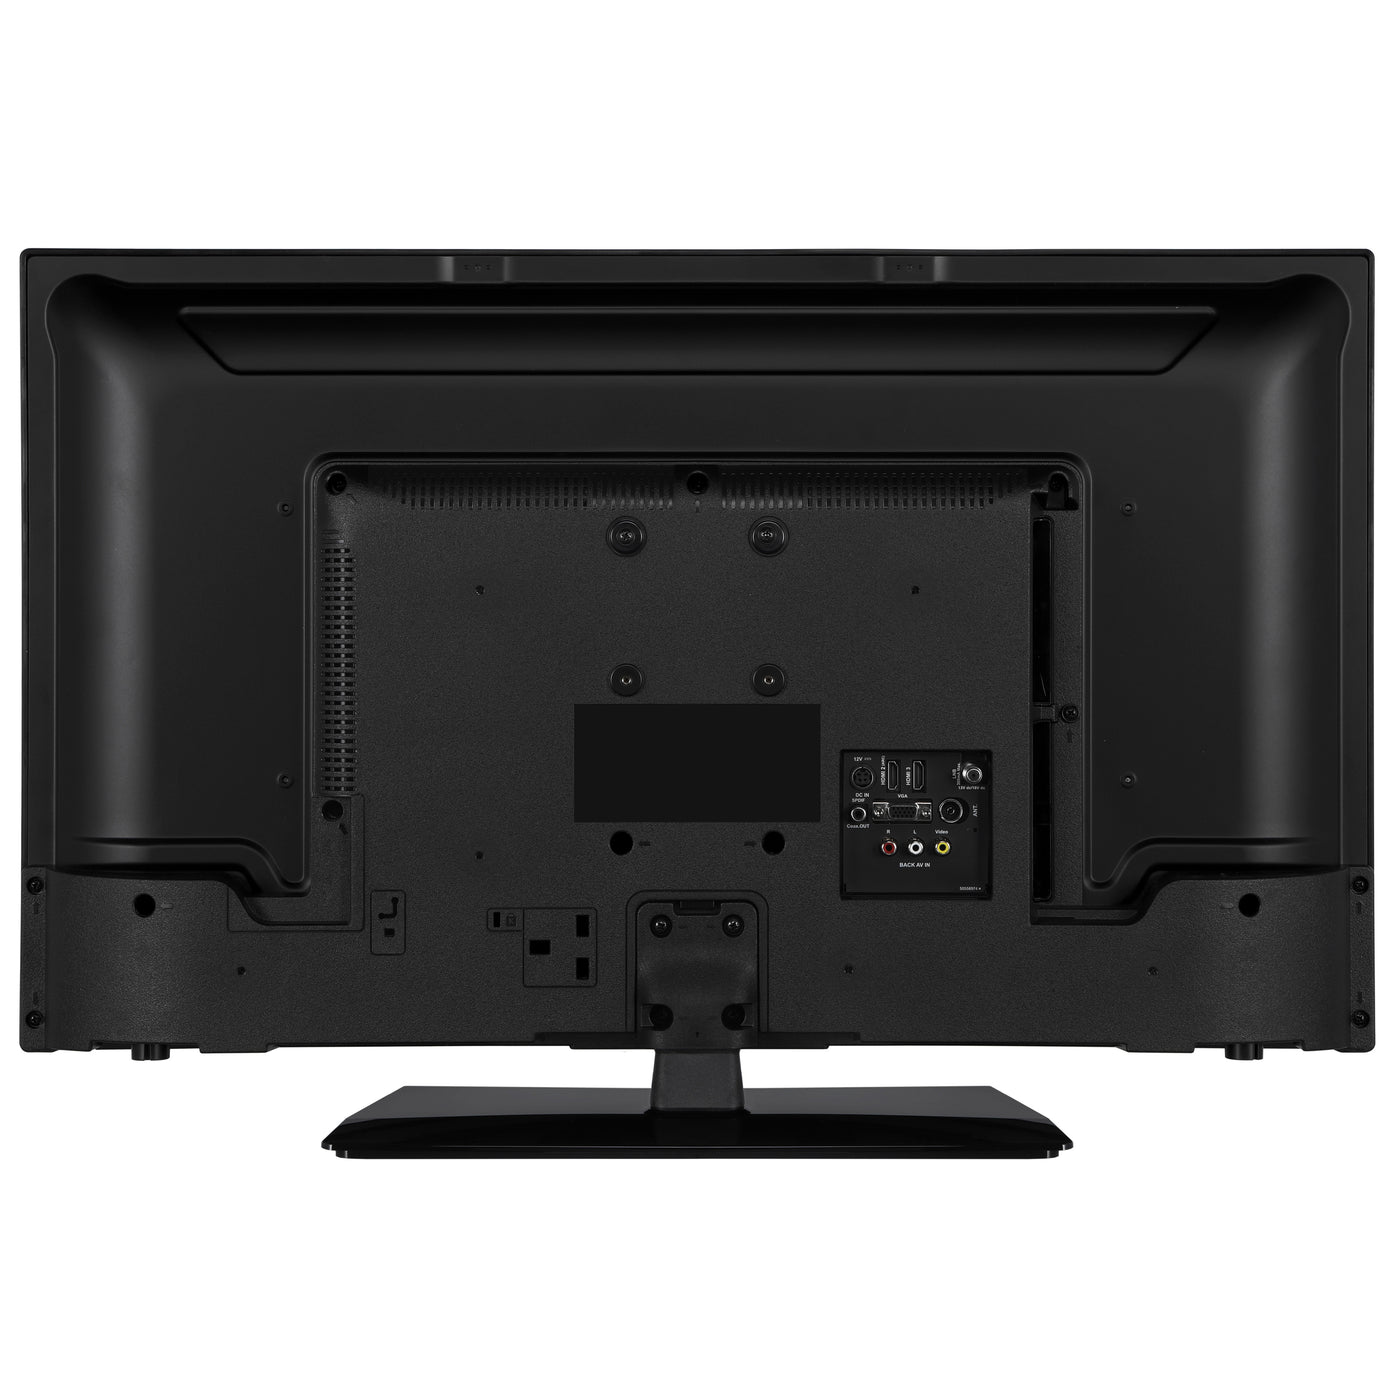 Lenco LED-3263BK (V2) - 32-Zoll Android-Smart-TV mit 12-V-Kfz-Adapter, schwarz